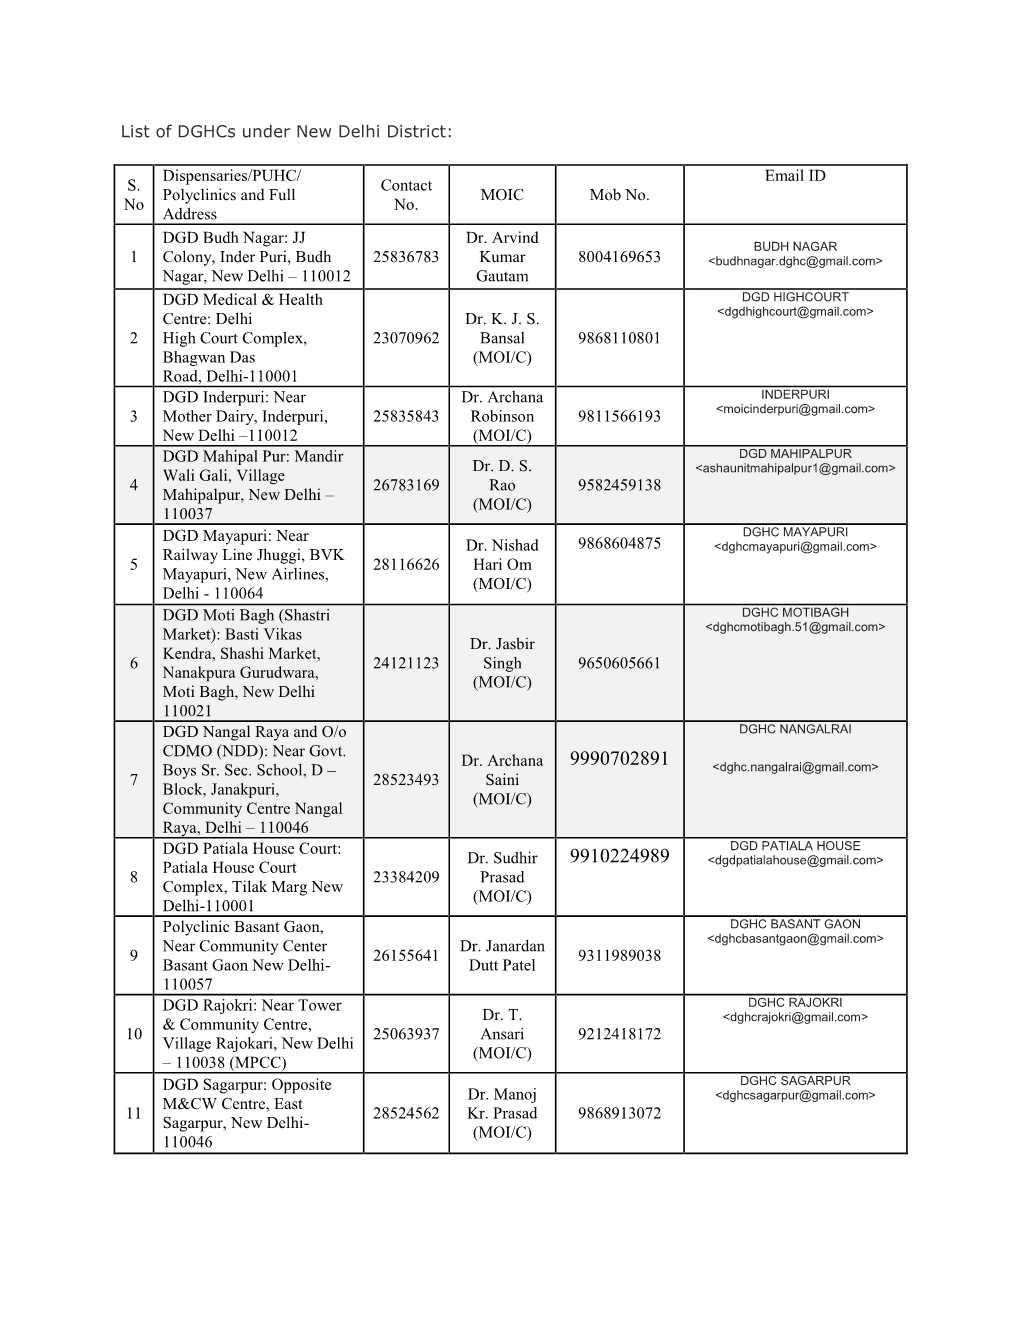 List of Dghcs Under New Delhi District: S. No Dispensaries/PUHC